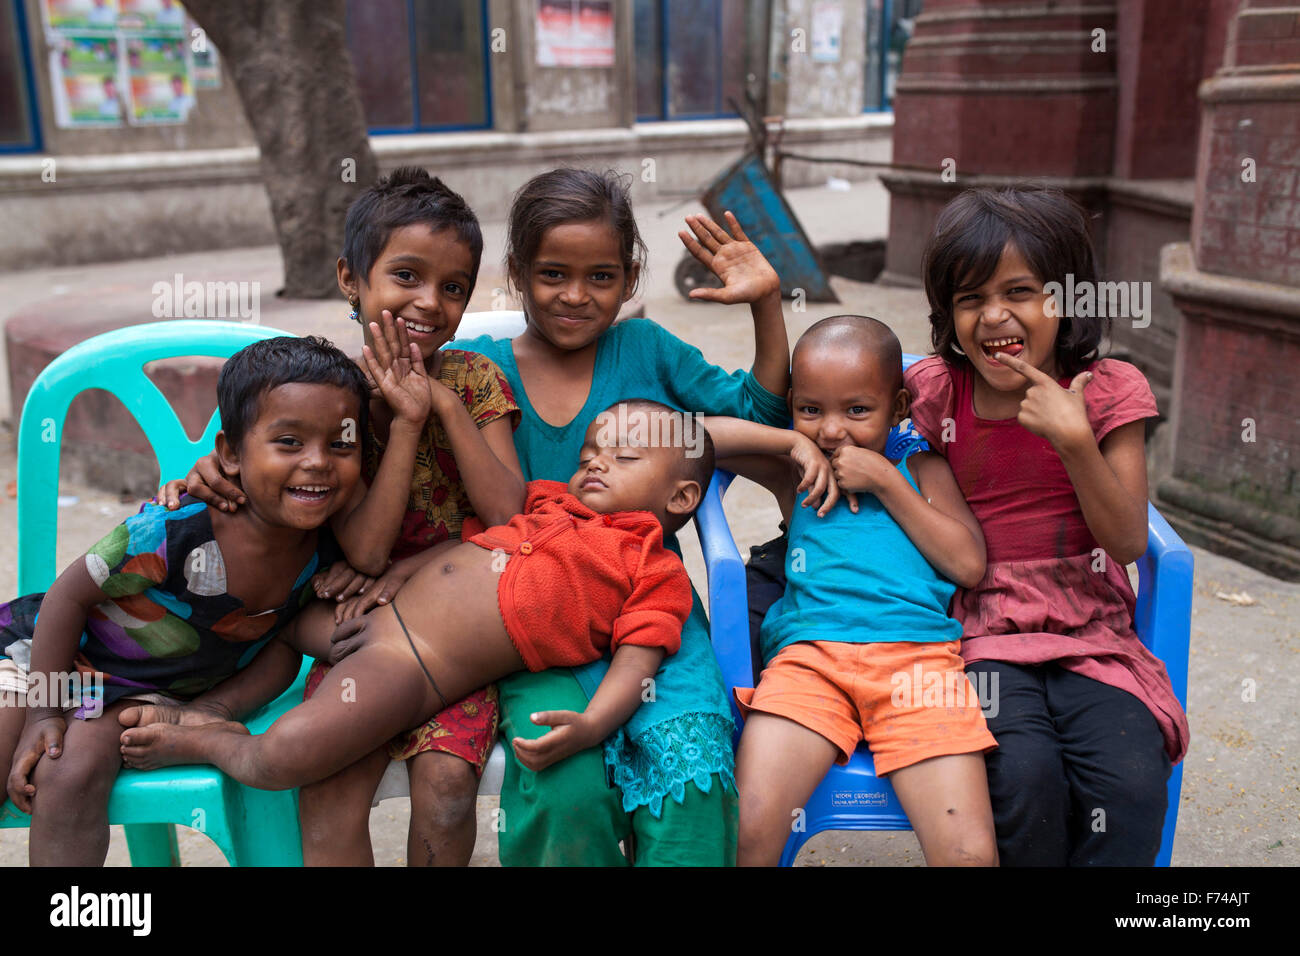 DHAKA, BANGLADESH 17th November: Street children playing in front of